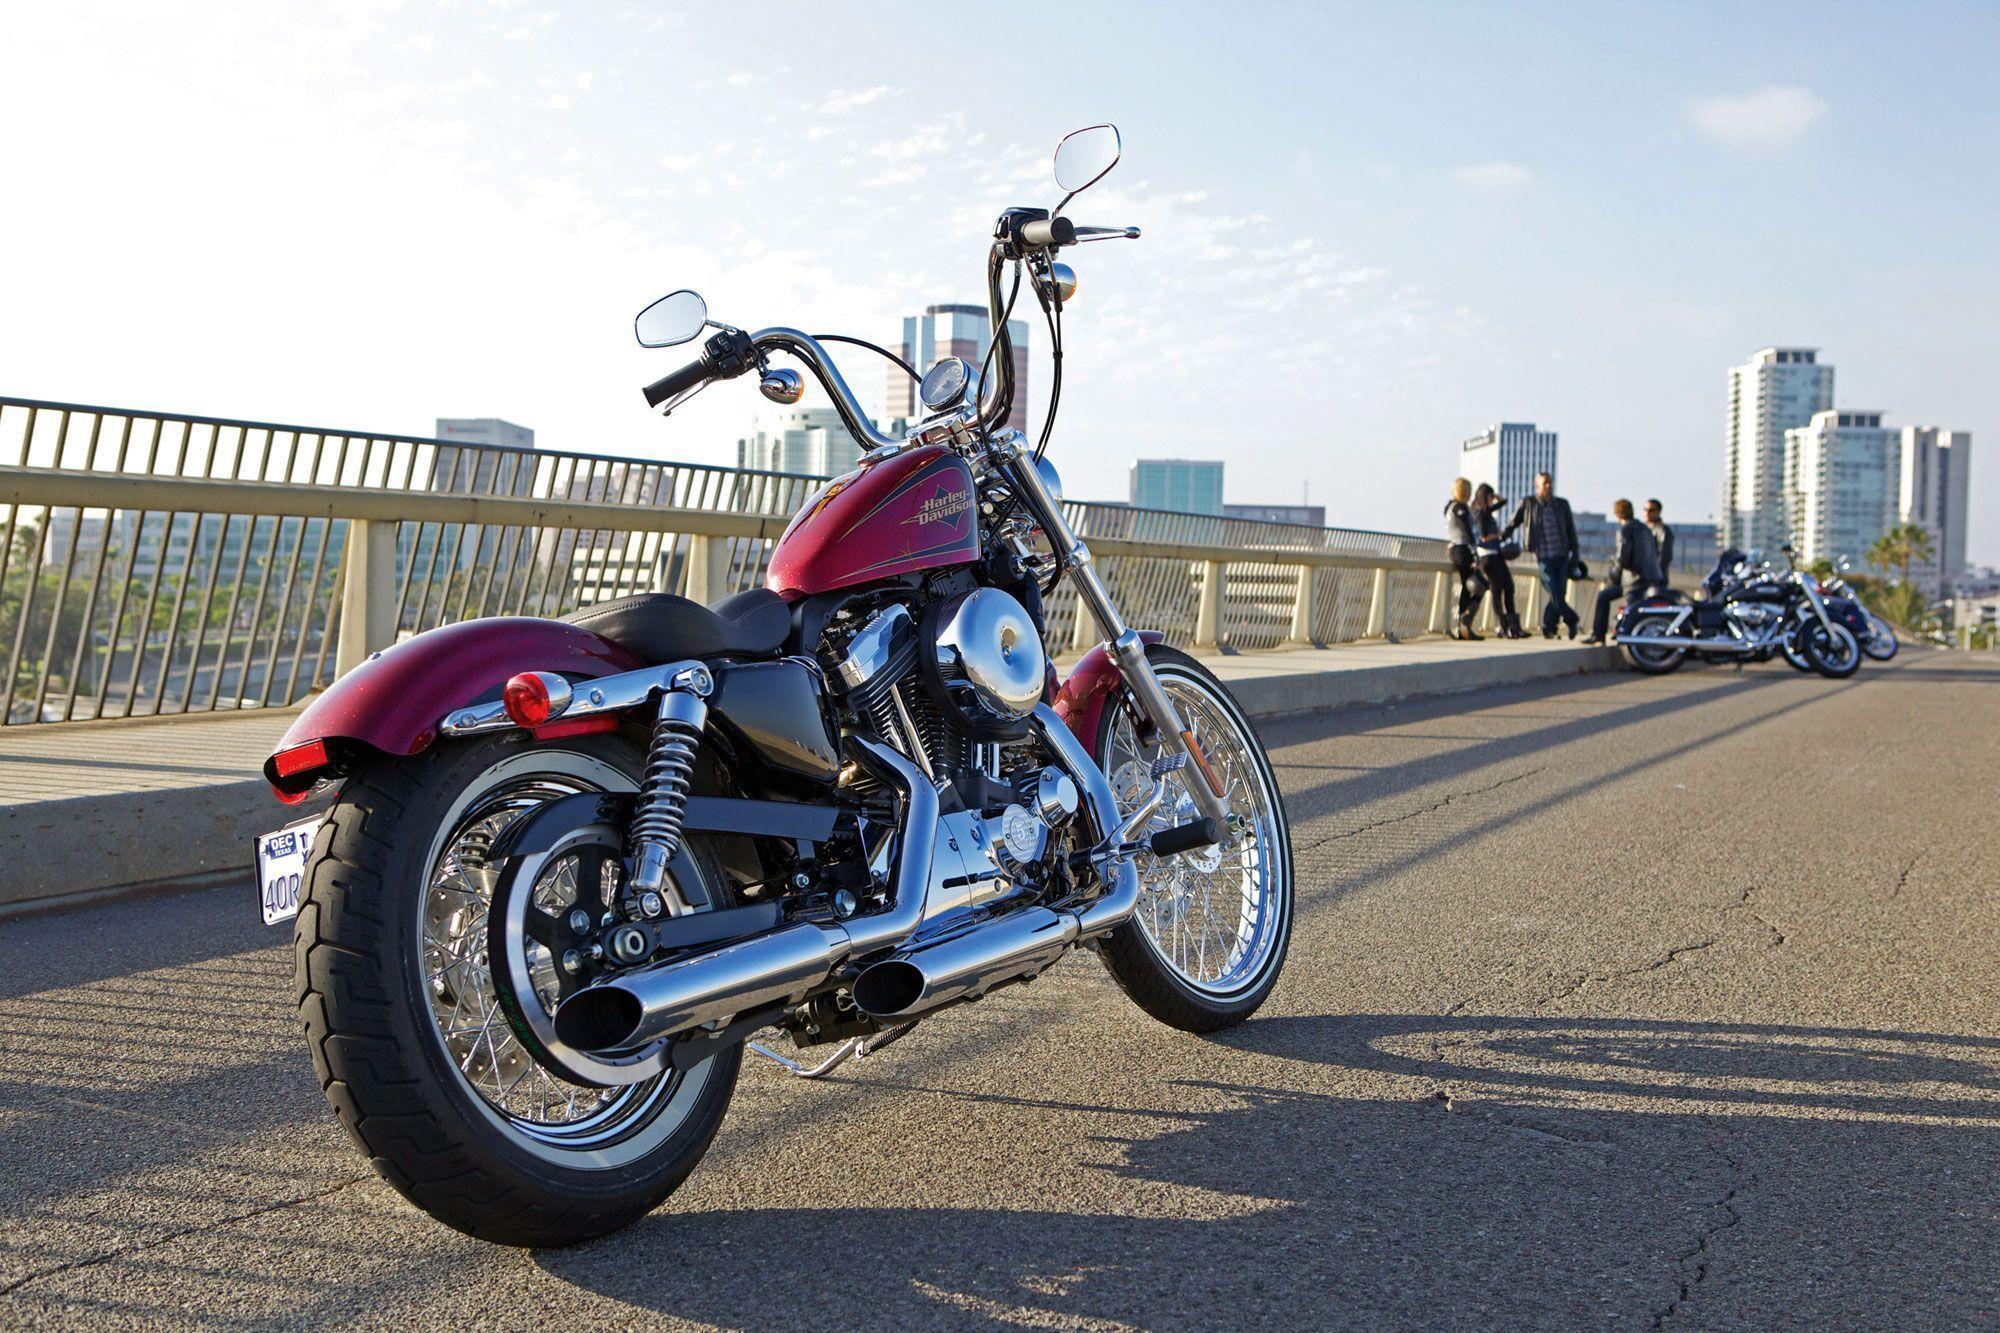 Harley Davidson XL1200V Seventy Two Review